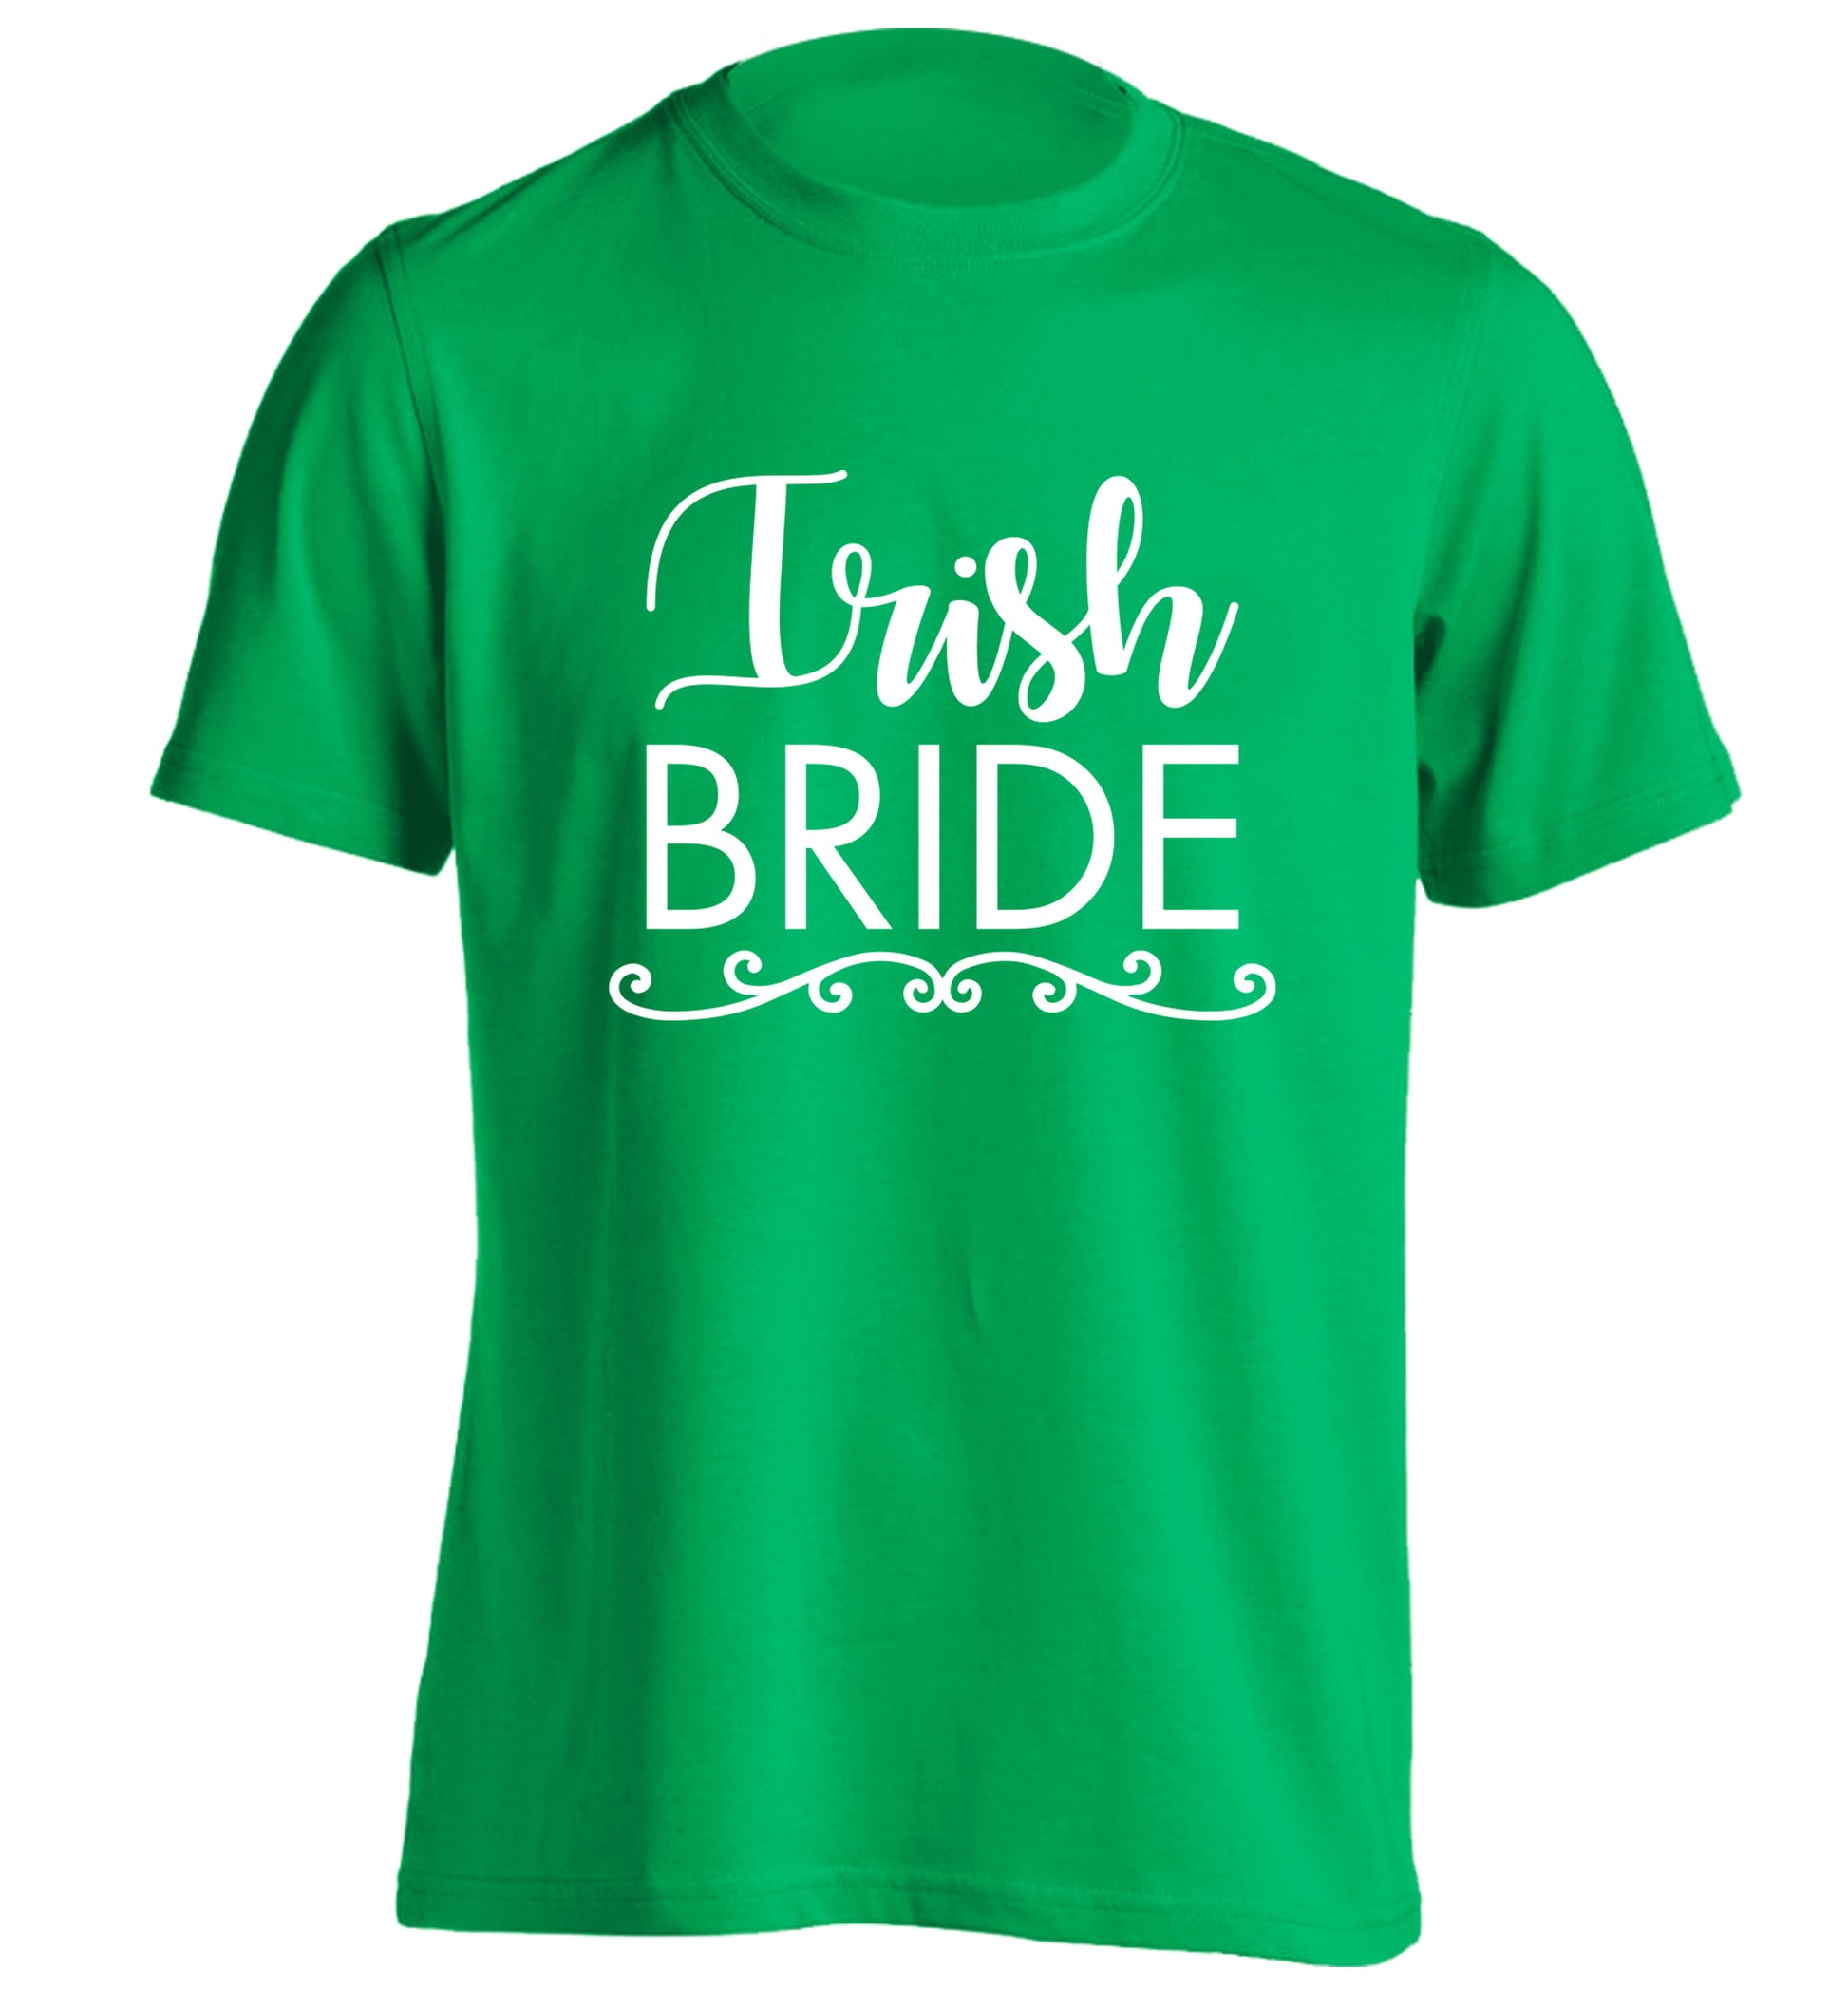 Irish bride adults unisex green Tshirt 2XL